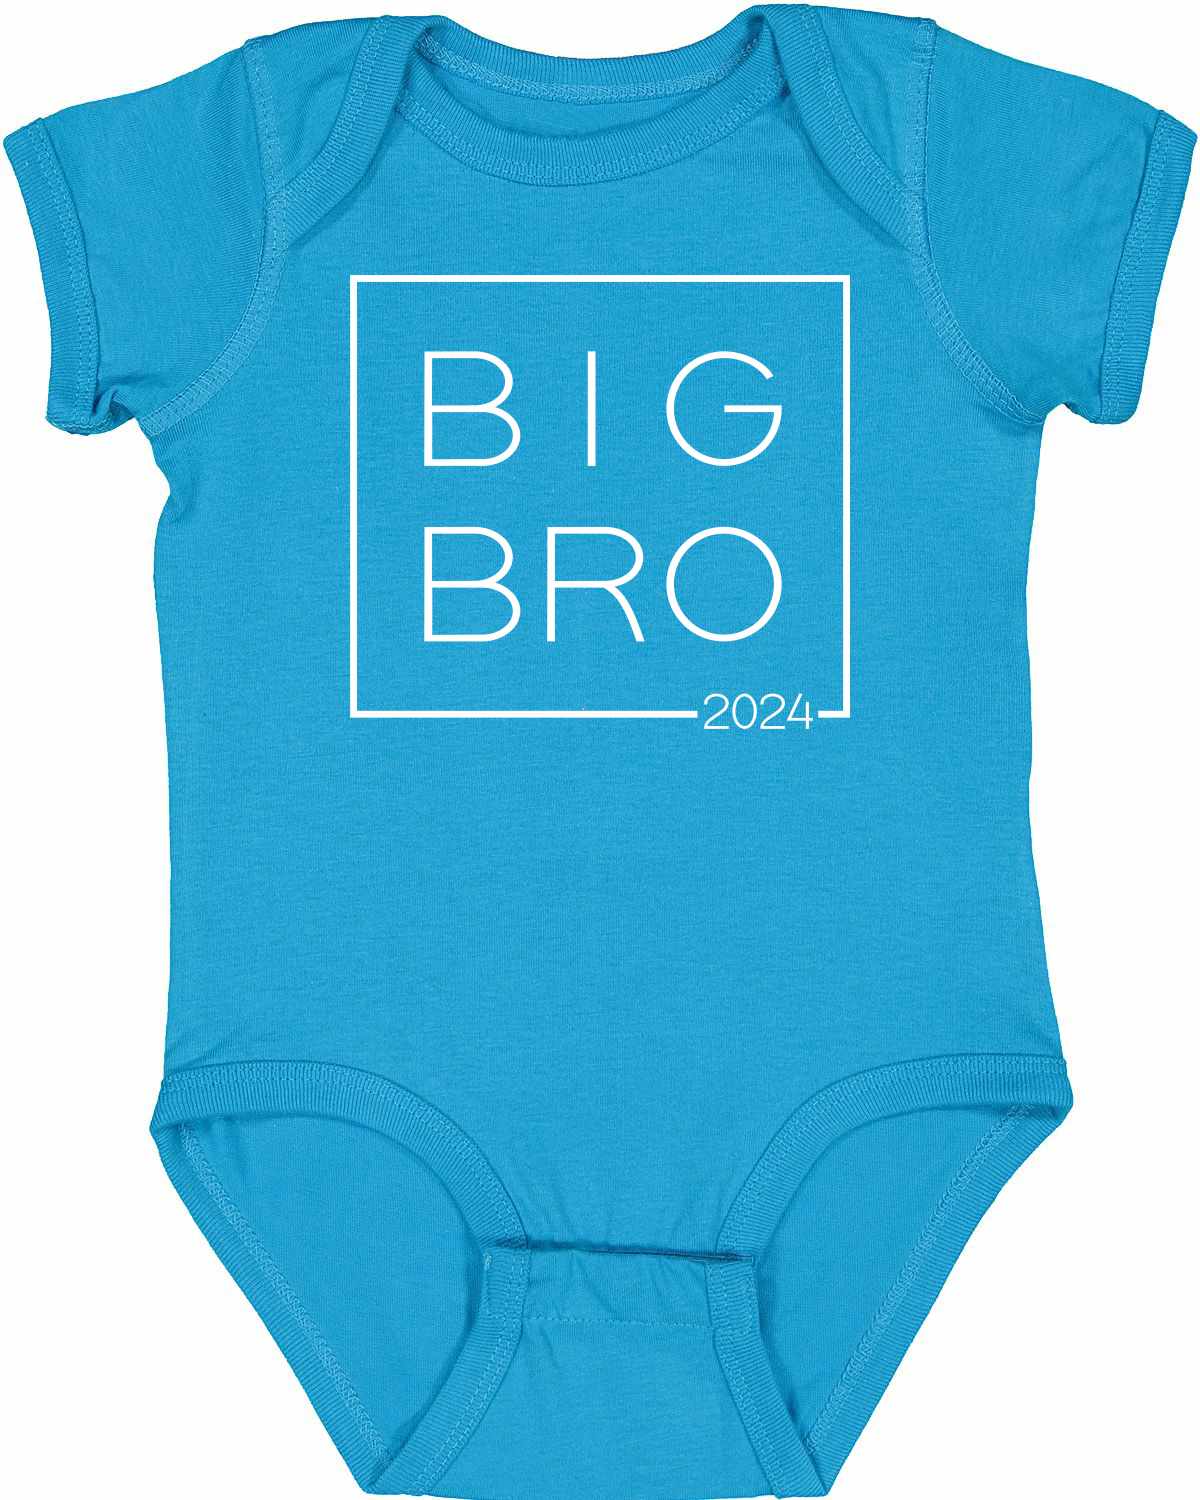 Big Bro 2024 - Big Brother Box on Infant BodySuit (#1353-10)